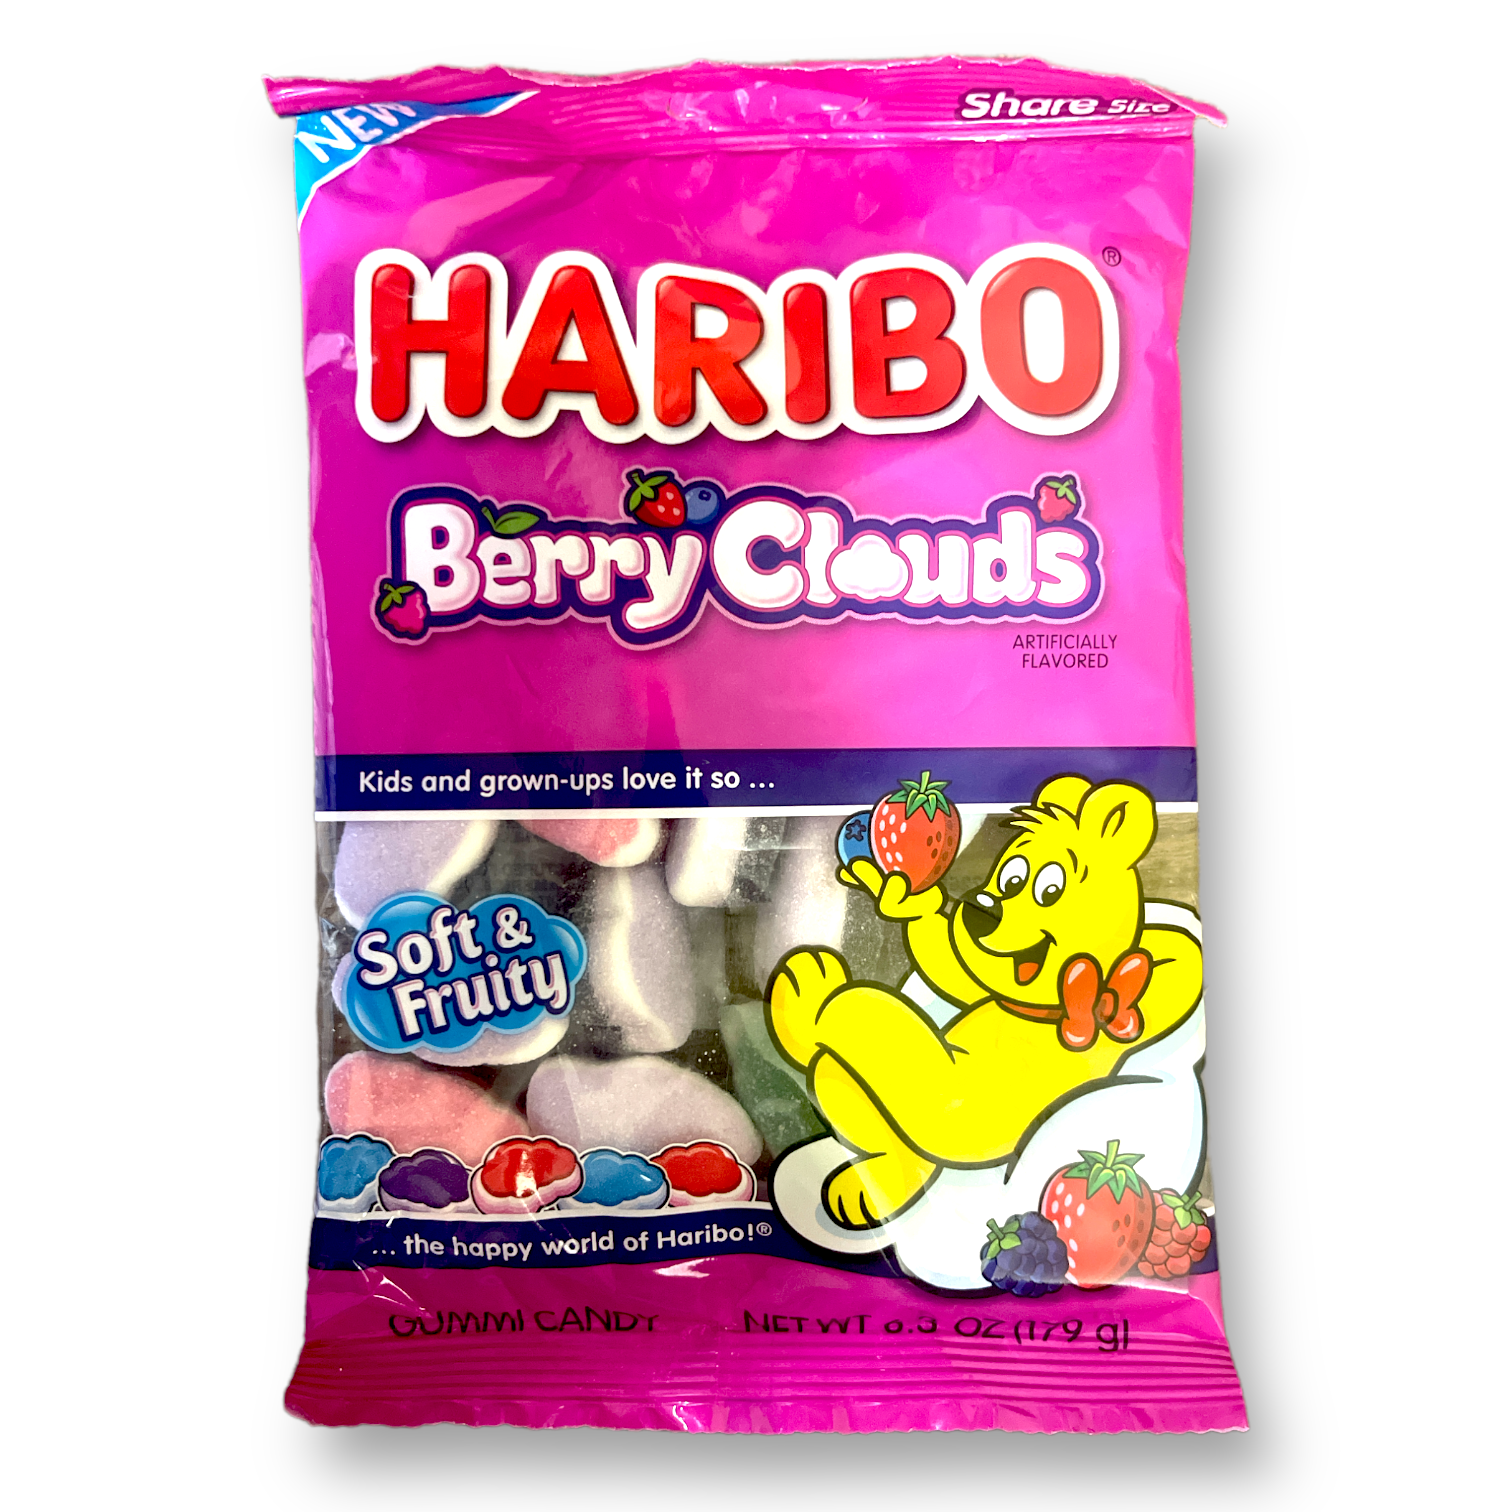 Haribo Berry Clouds Gummi Candy, 6.3oz Bag